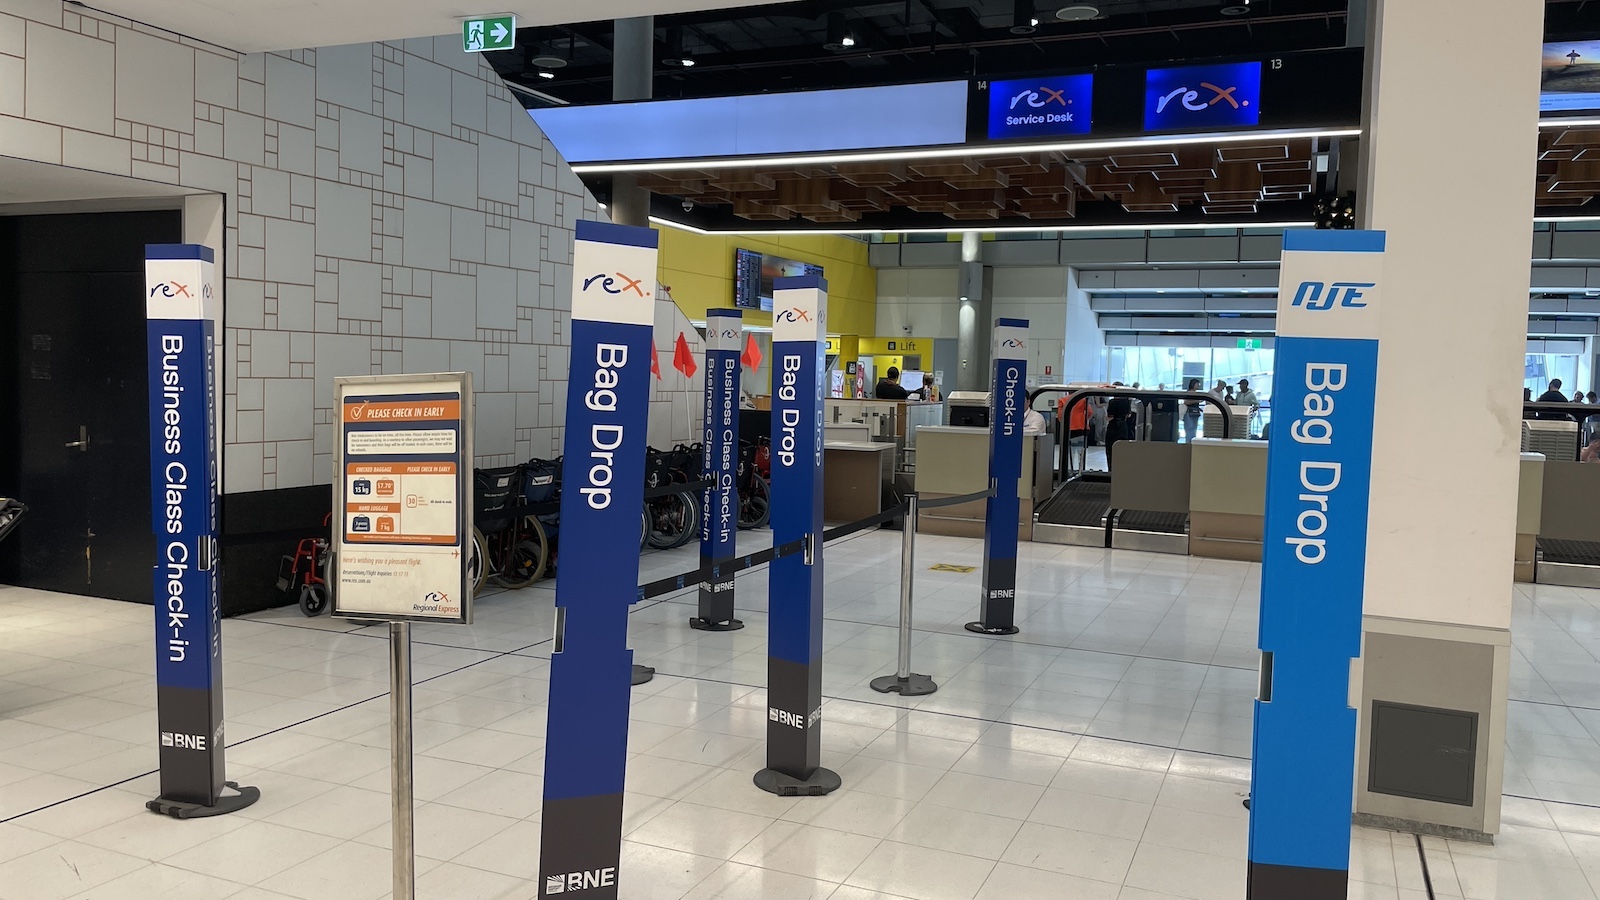 Rex Airlines Brisbane to Sydney Rex NJE Manned Check-in Desks Point Hacks